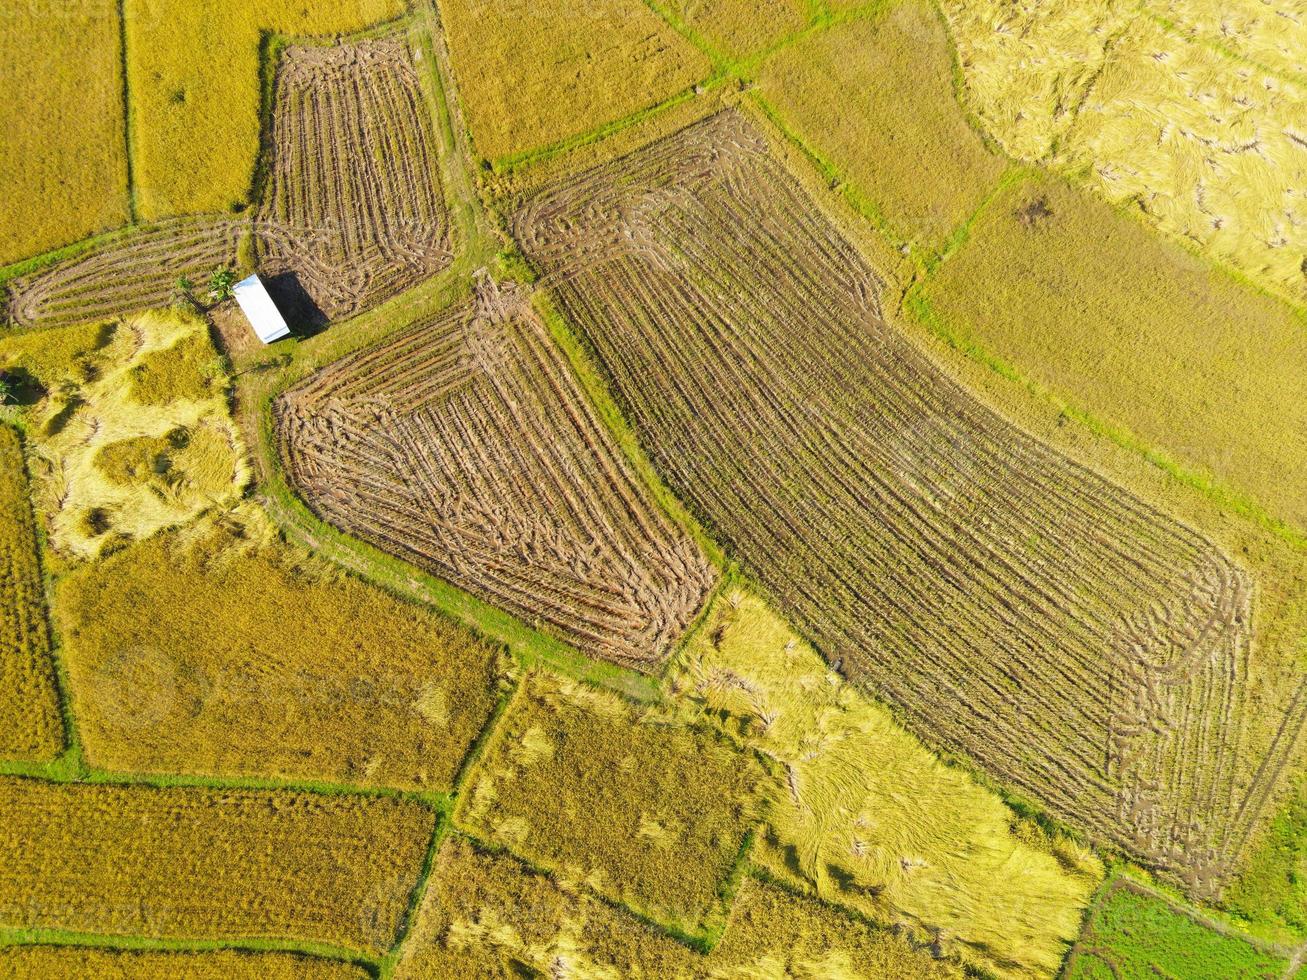 vista superior cosechar campo de arroz desde arriba con cultivos agrícolas amarillo listo para cosechar, vista aérea del área del campo de arroz campos naturaleza granja agrícola, vista de pájaro foto